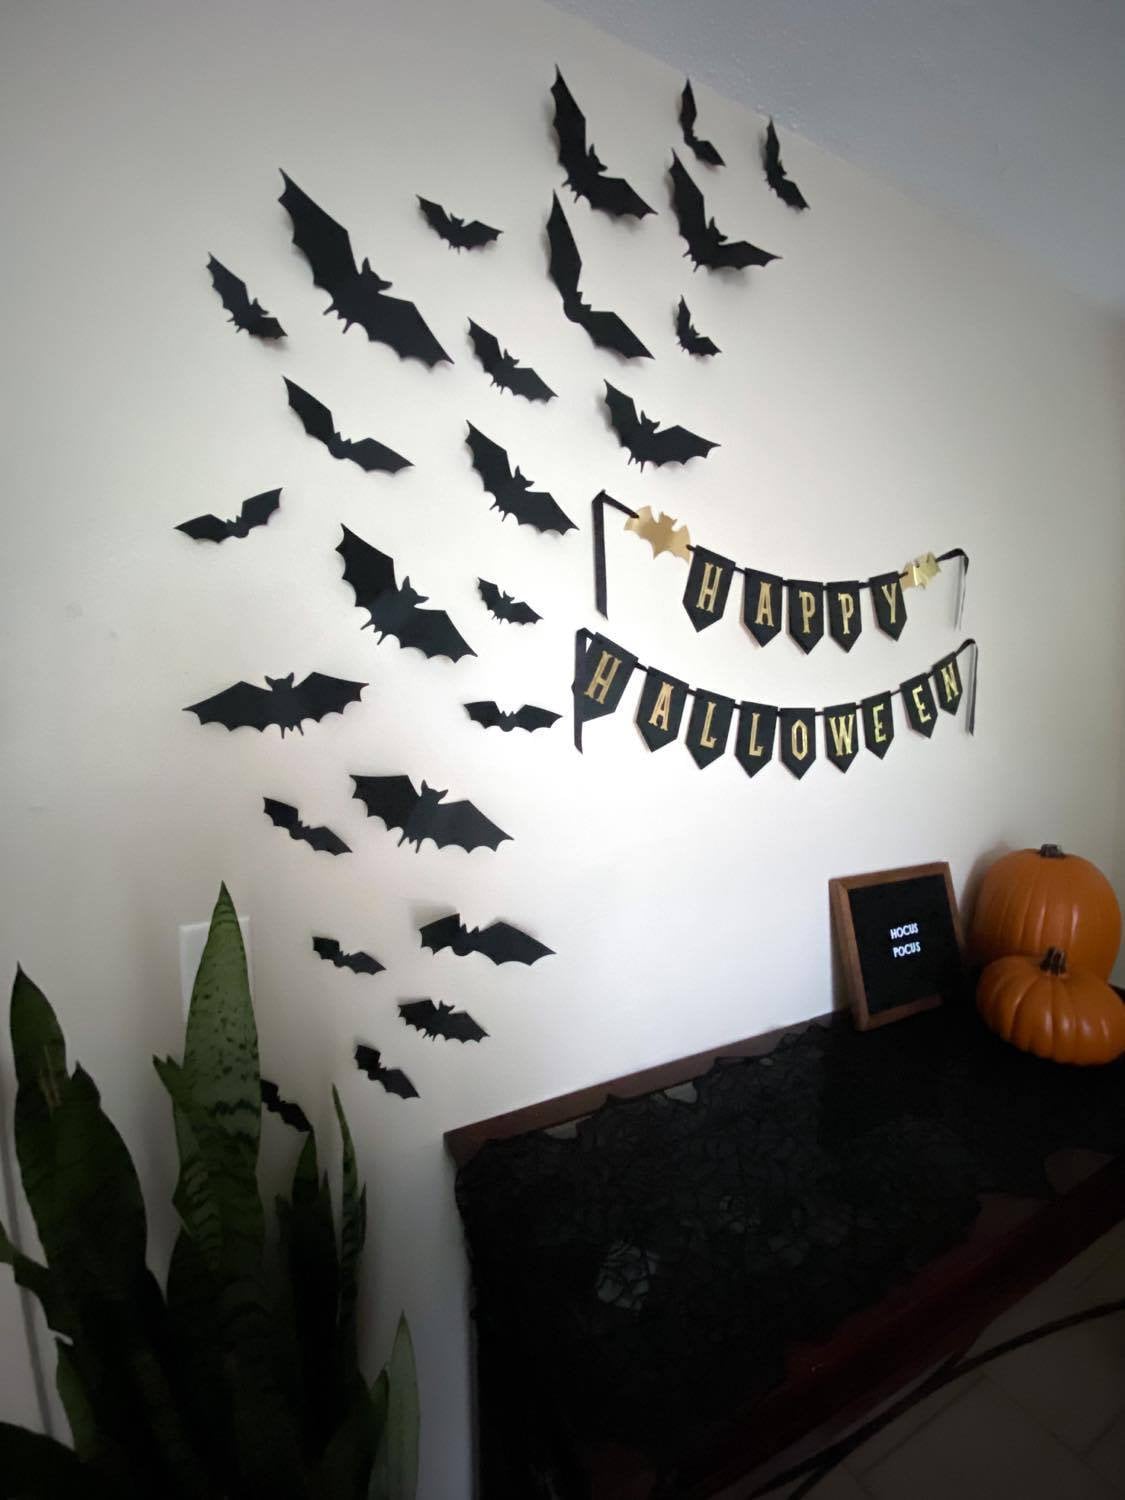 Make Your Bedroom a Halloween Wonderland with Bats!